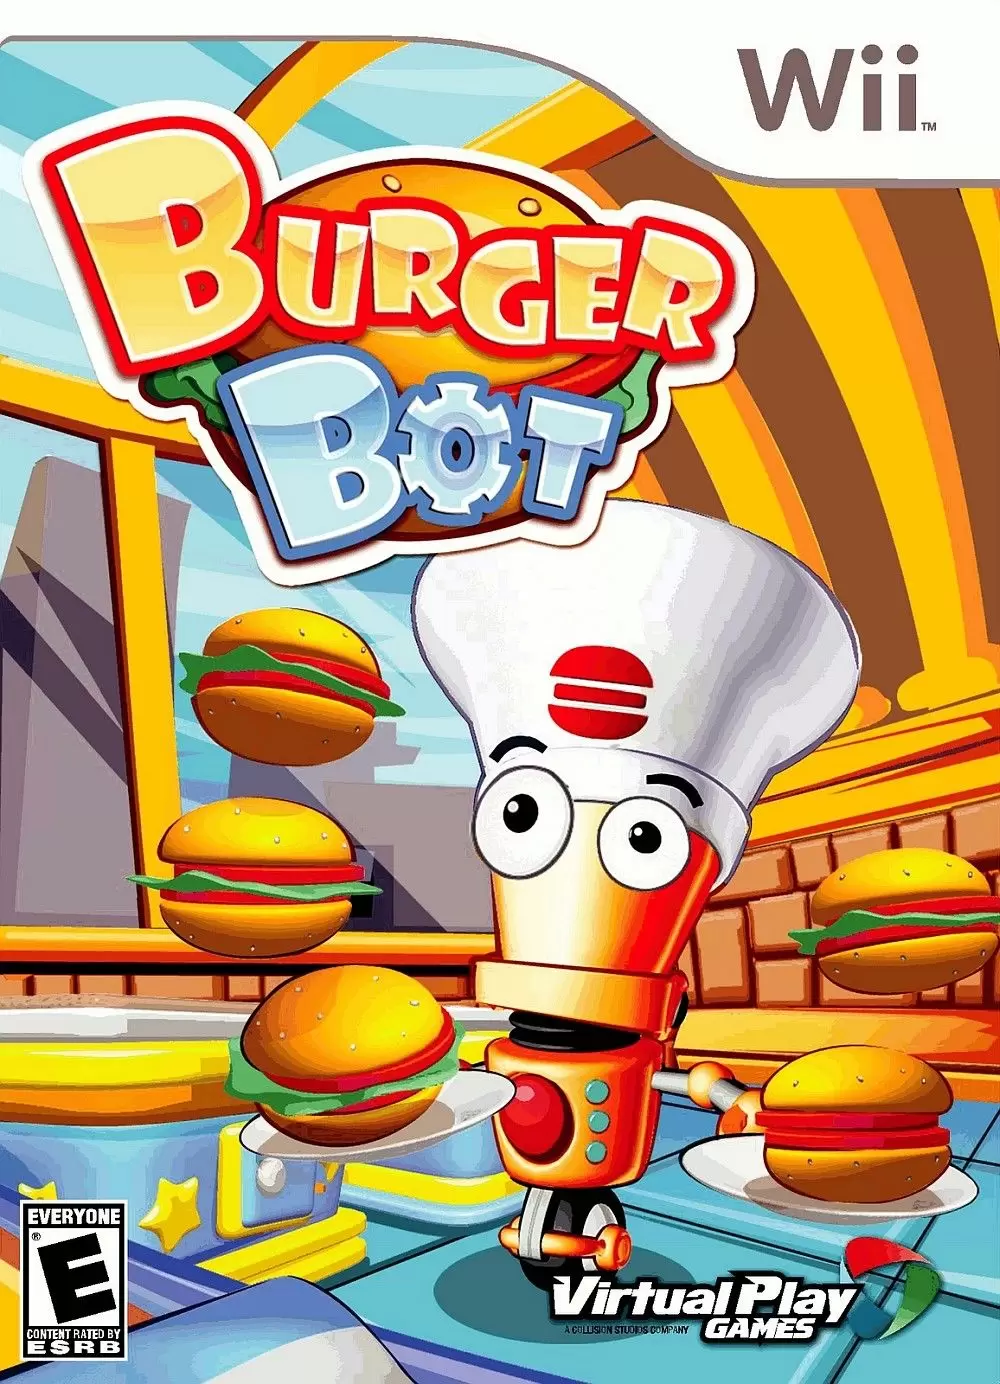 Nintendo Wii Games - Burger Bot